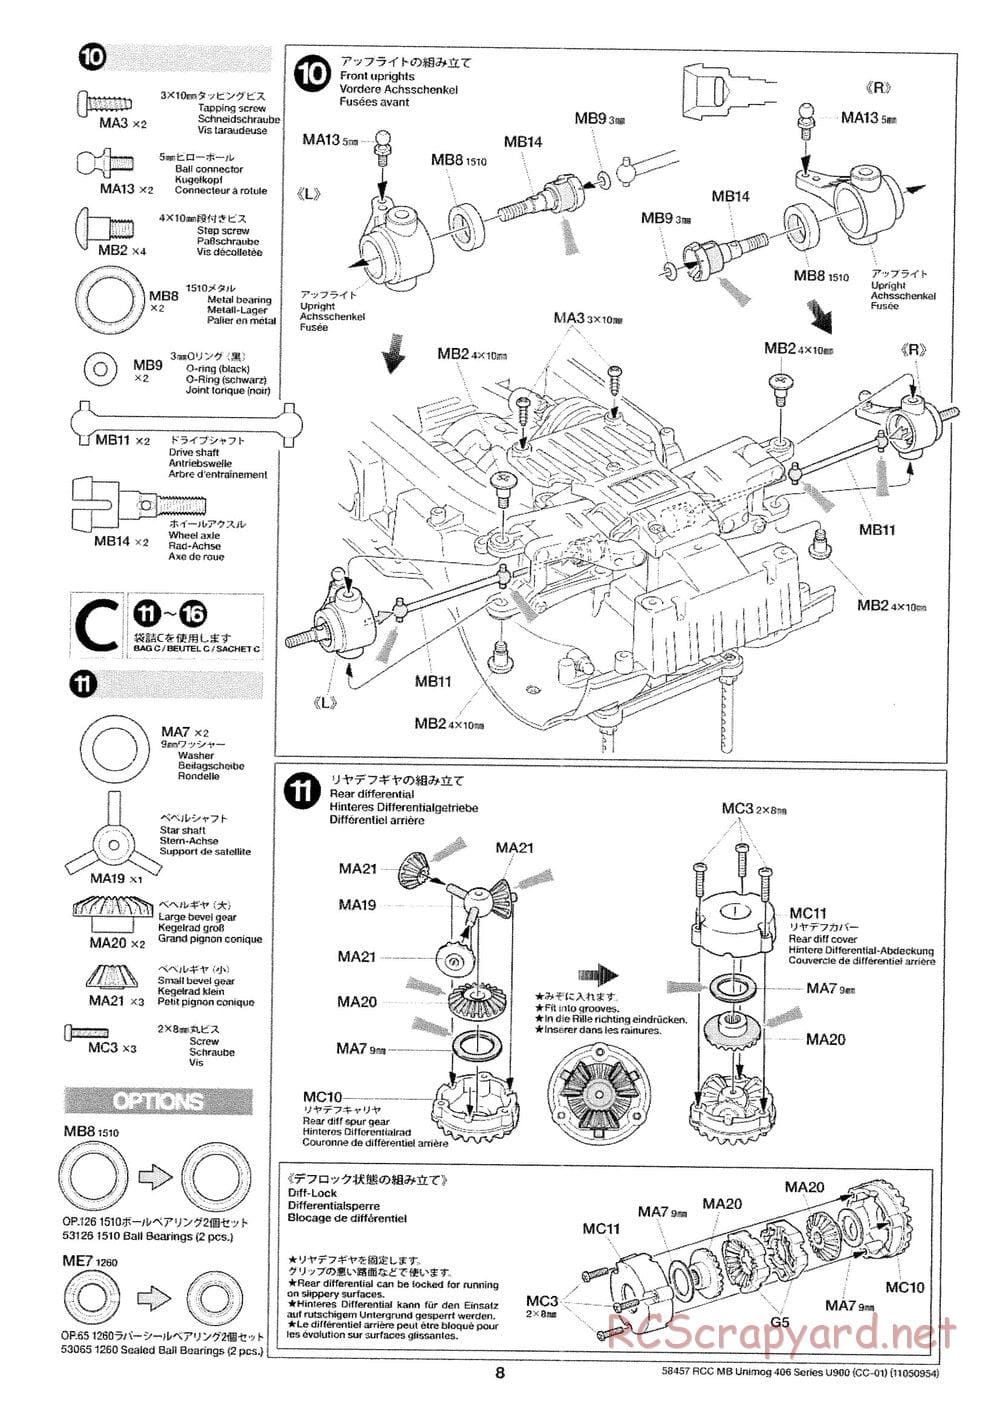 Tamiya - Mercedes-Benz Unimog 406 Series U900 - CC-01 Chassis - Manual - Page 8